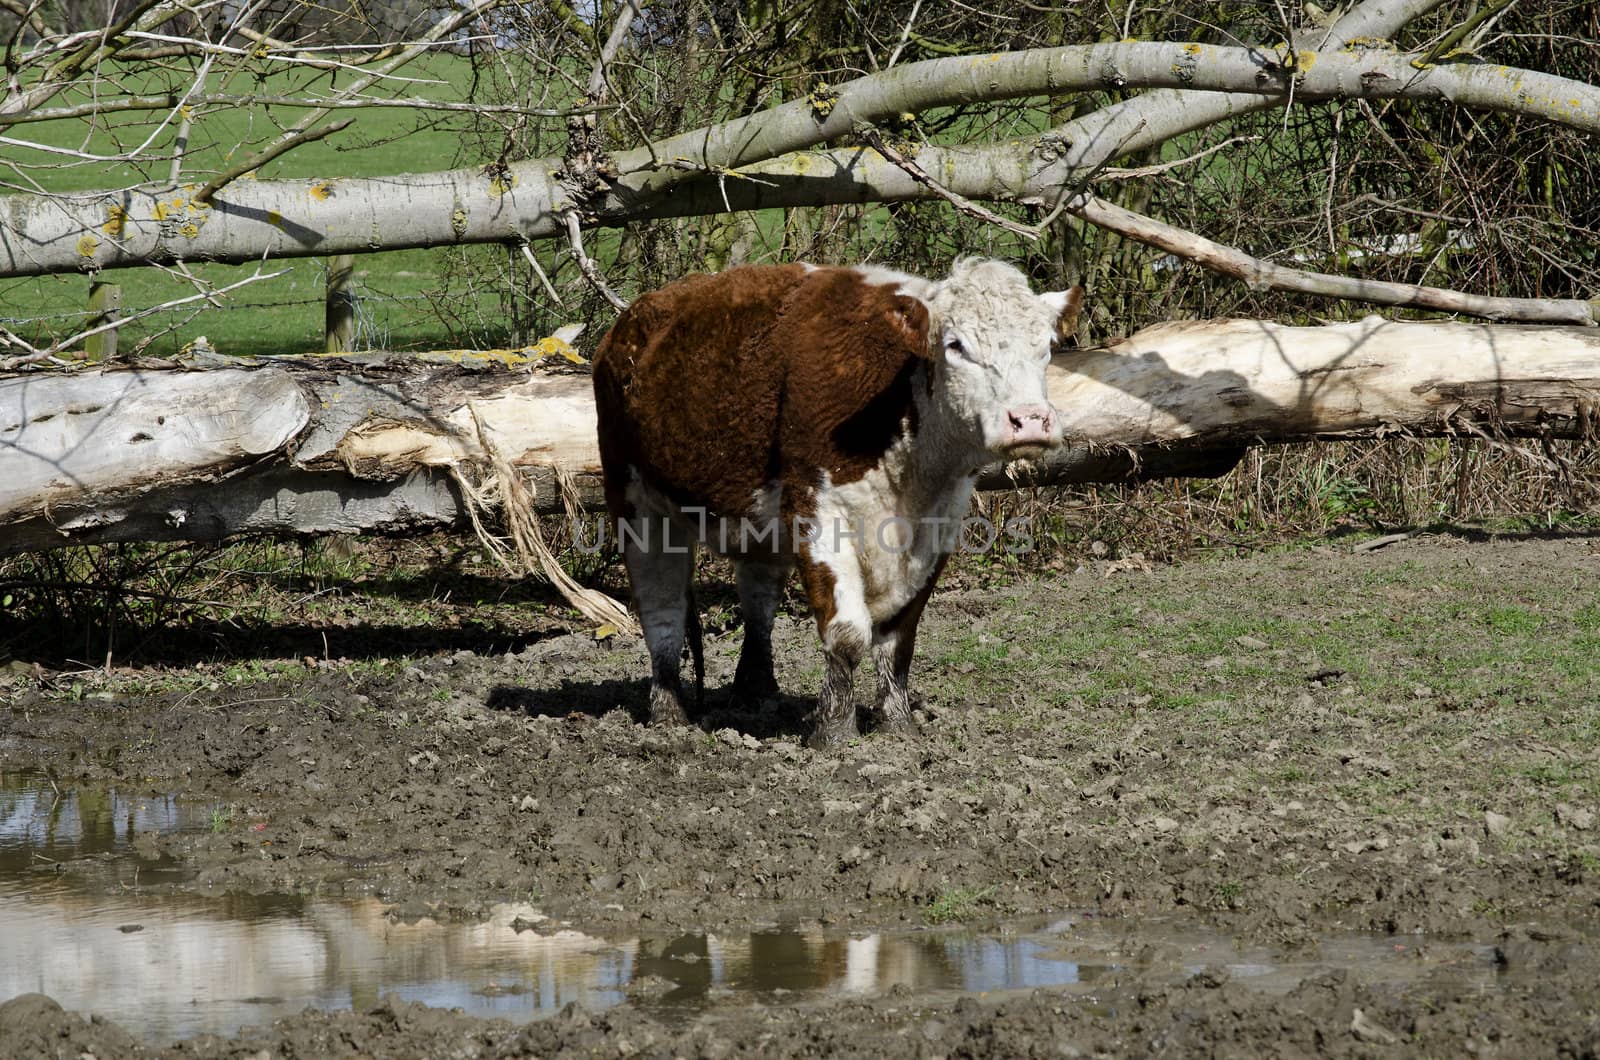 A Bull In Mud by Downart